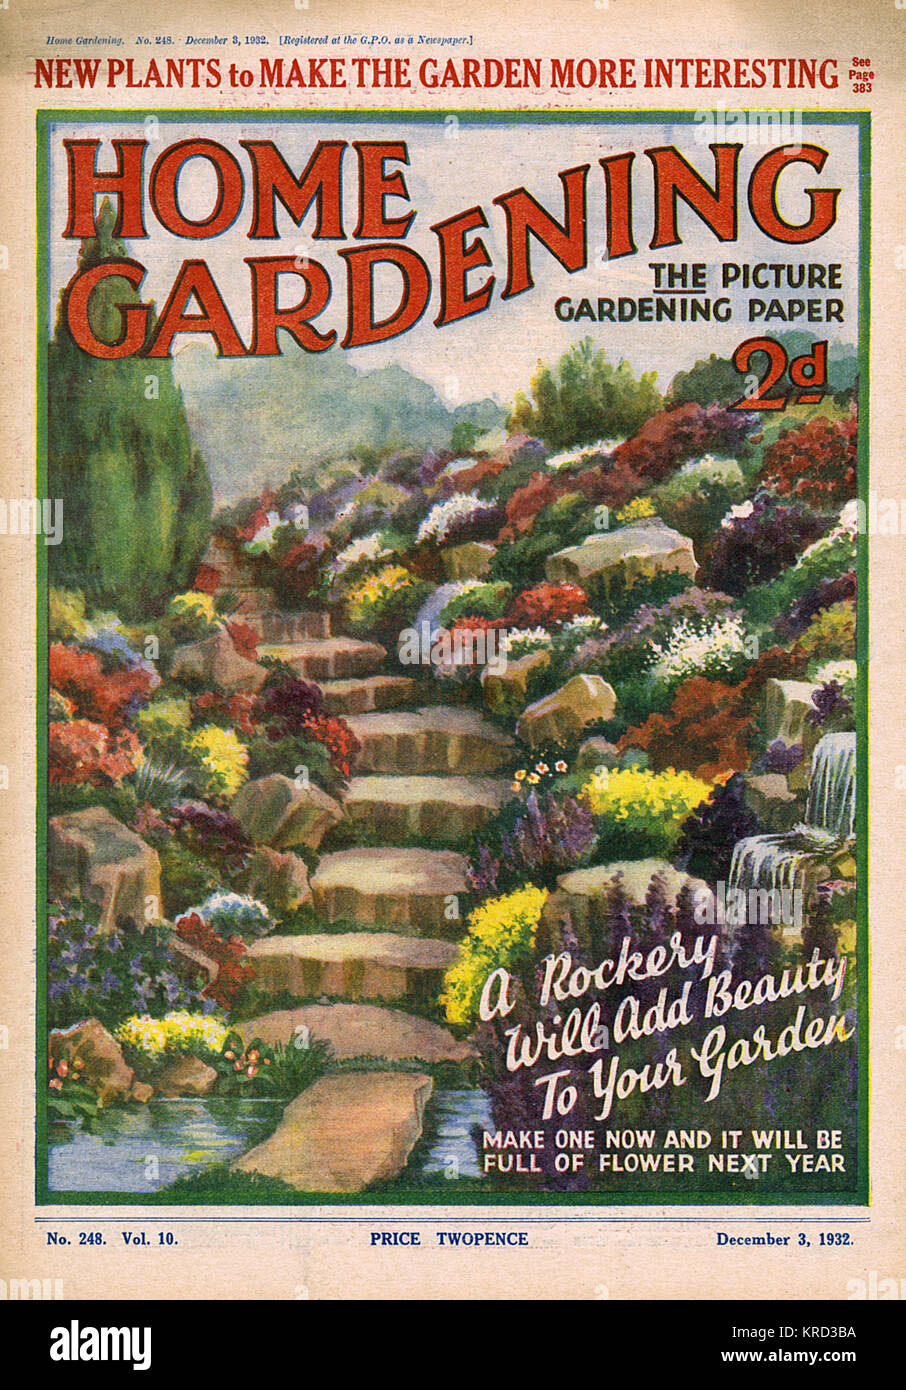 Home Gardening magazine, December 1932 Stock Photo